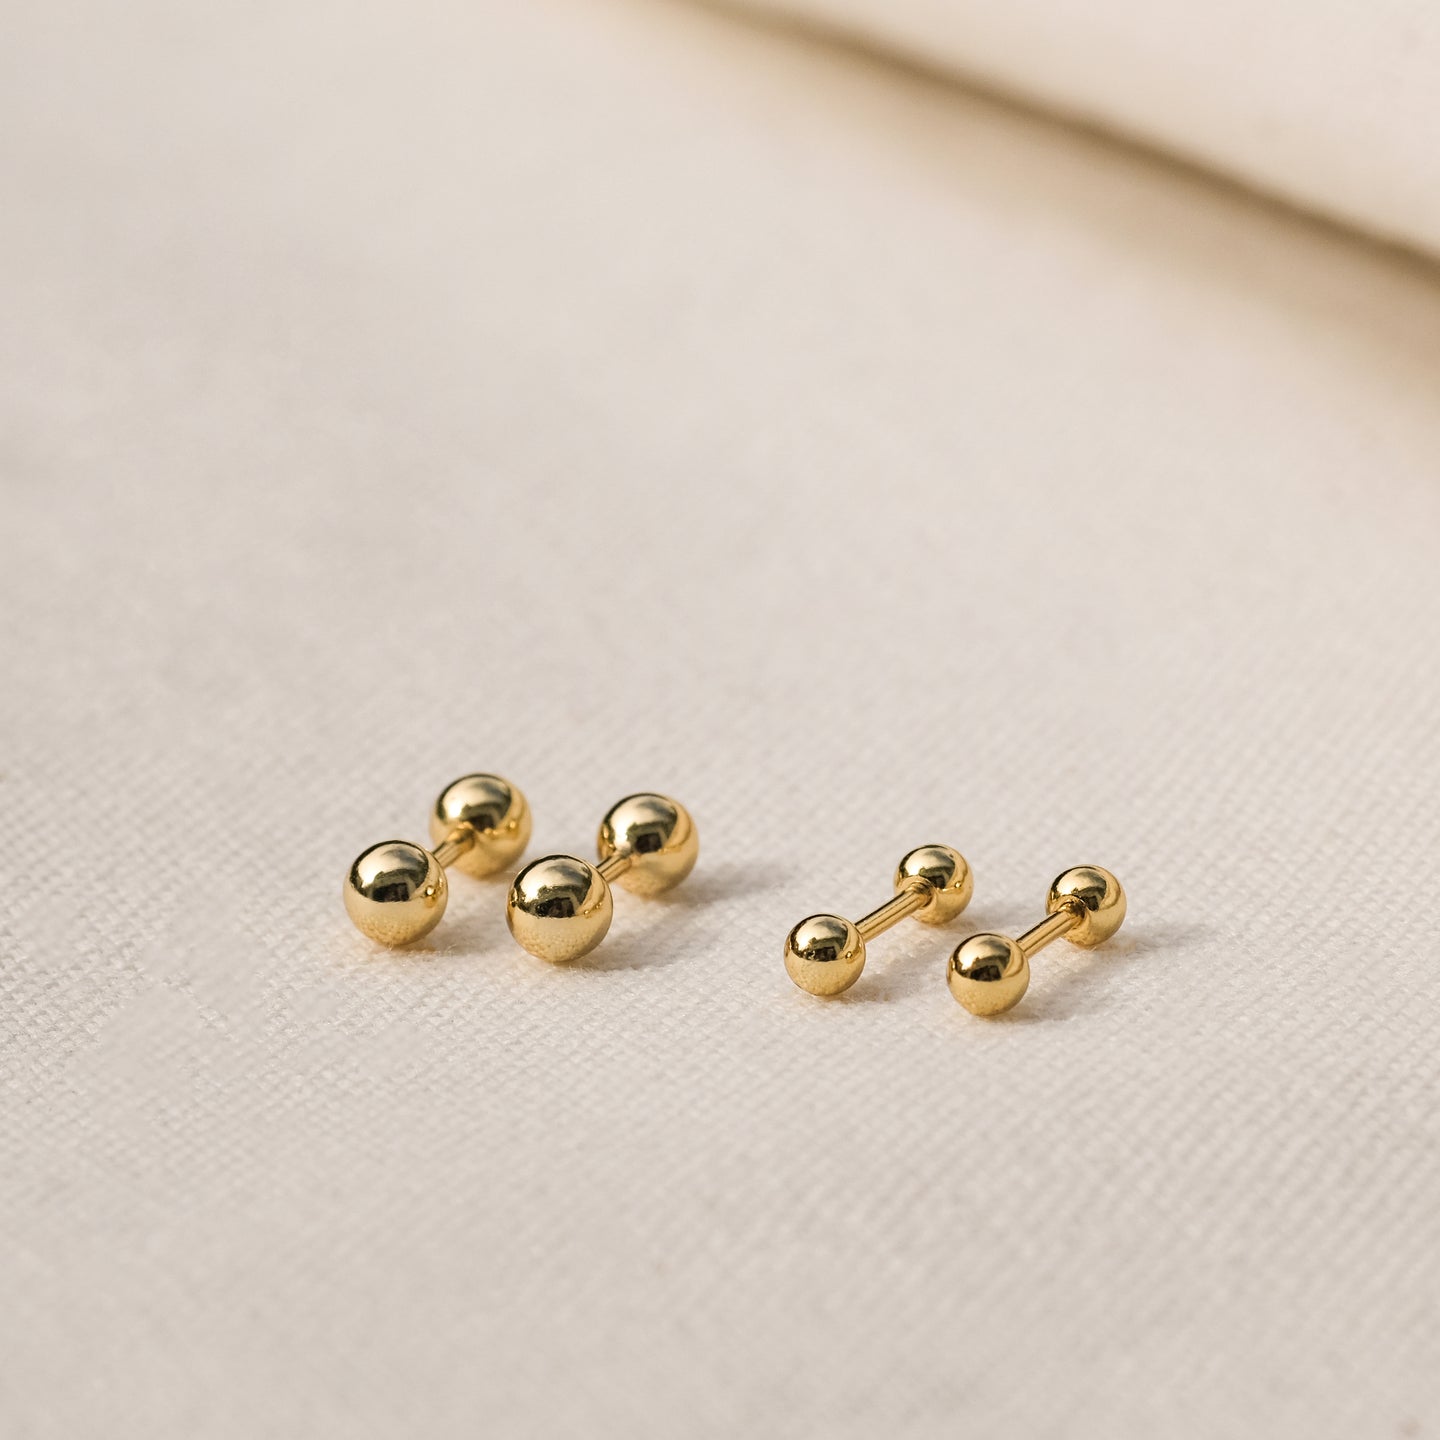 products/hola-teeny-tiny-stud-earrings-18k-gold-vermeil-2.jpg